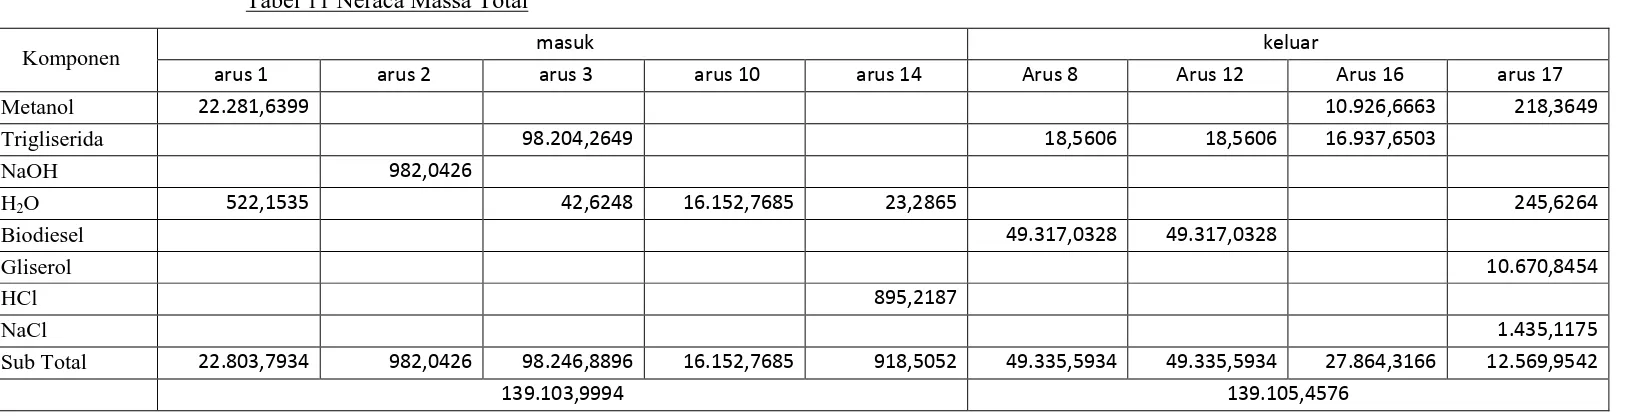 Tabel 11 Neraca Massa Total 